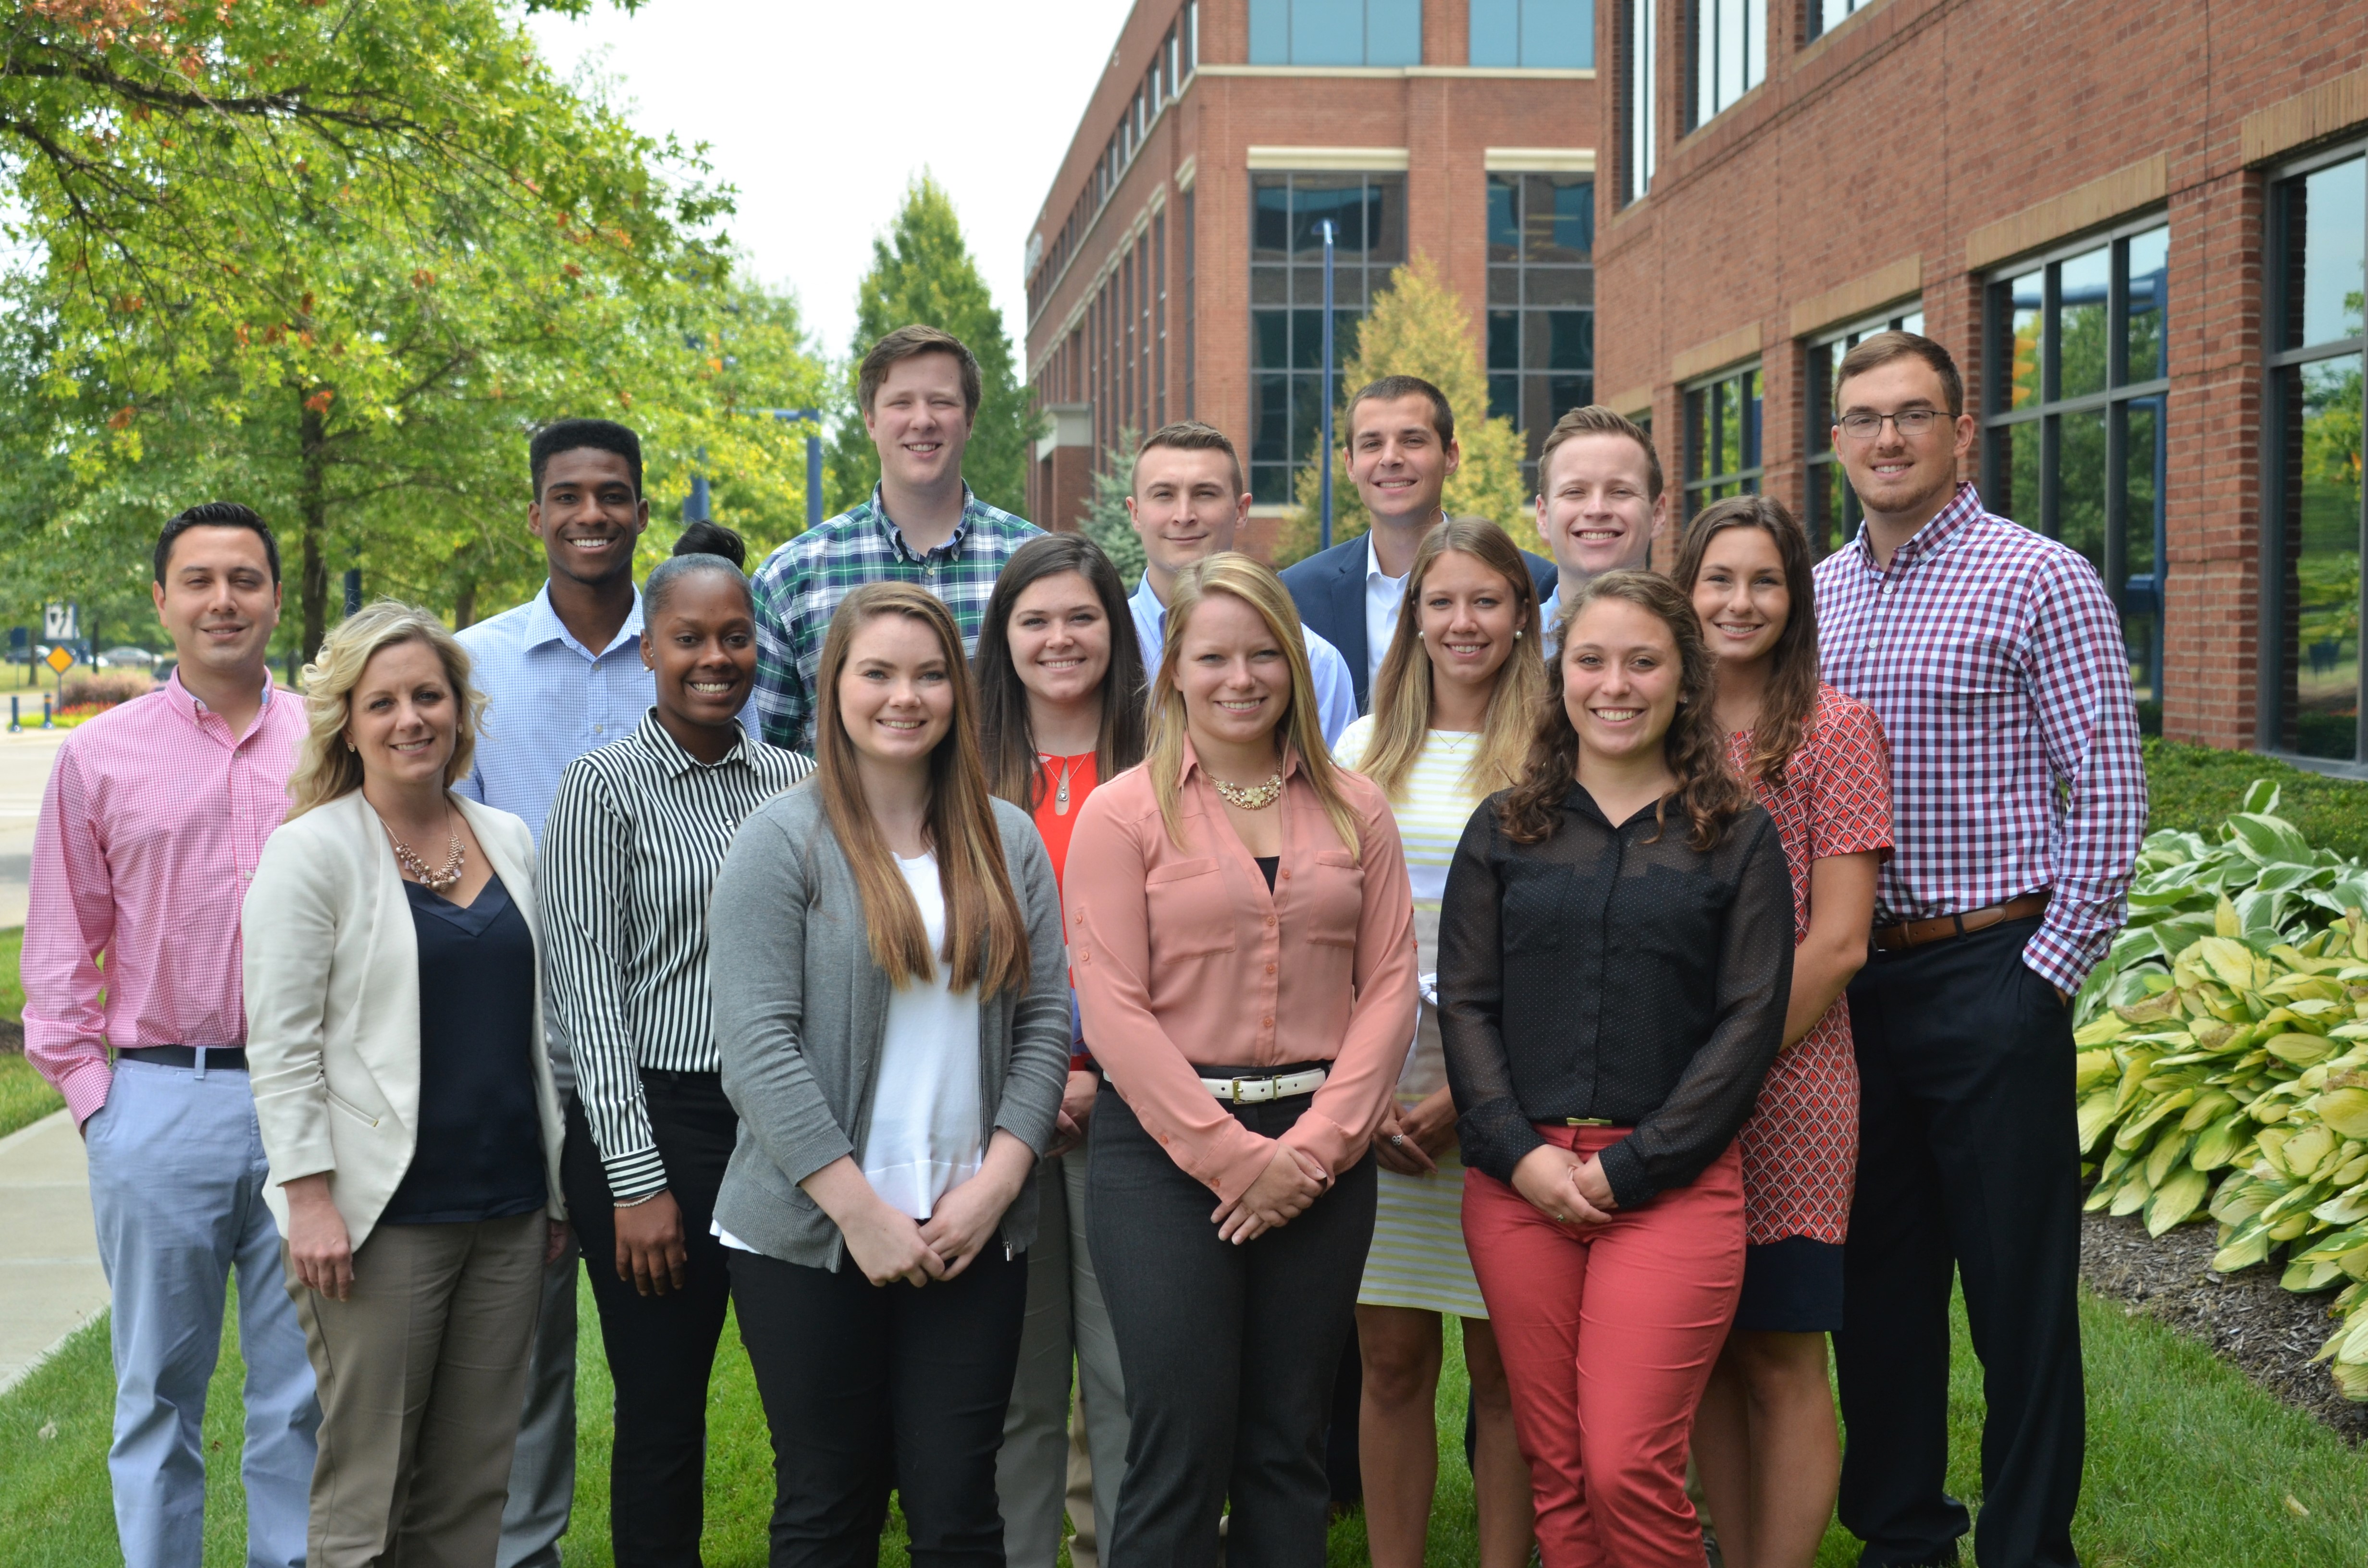 The Ohio CPA Foundation Student Ambassadors